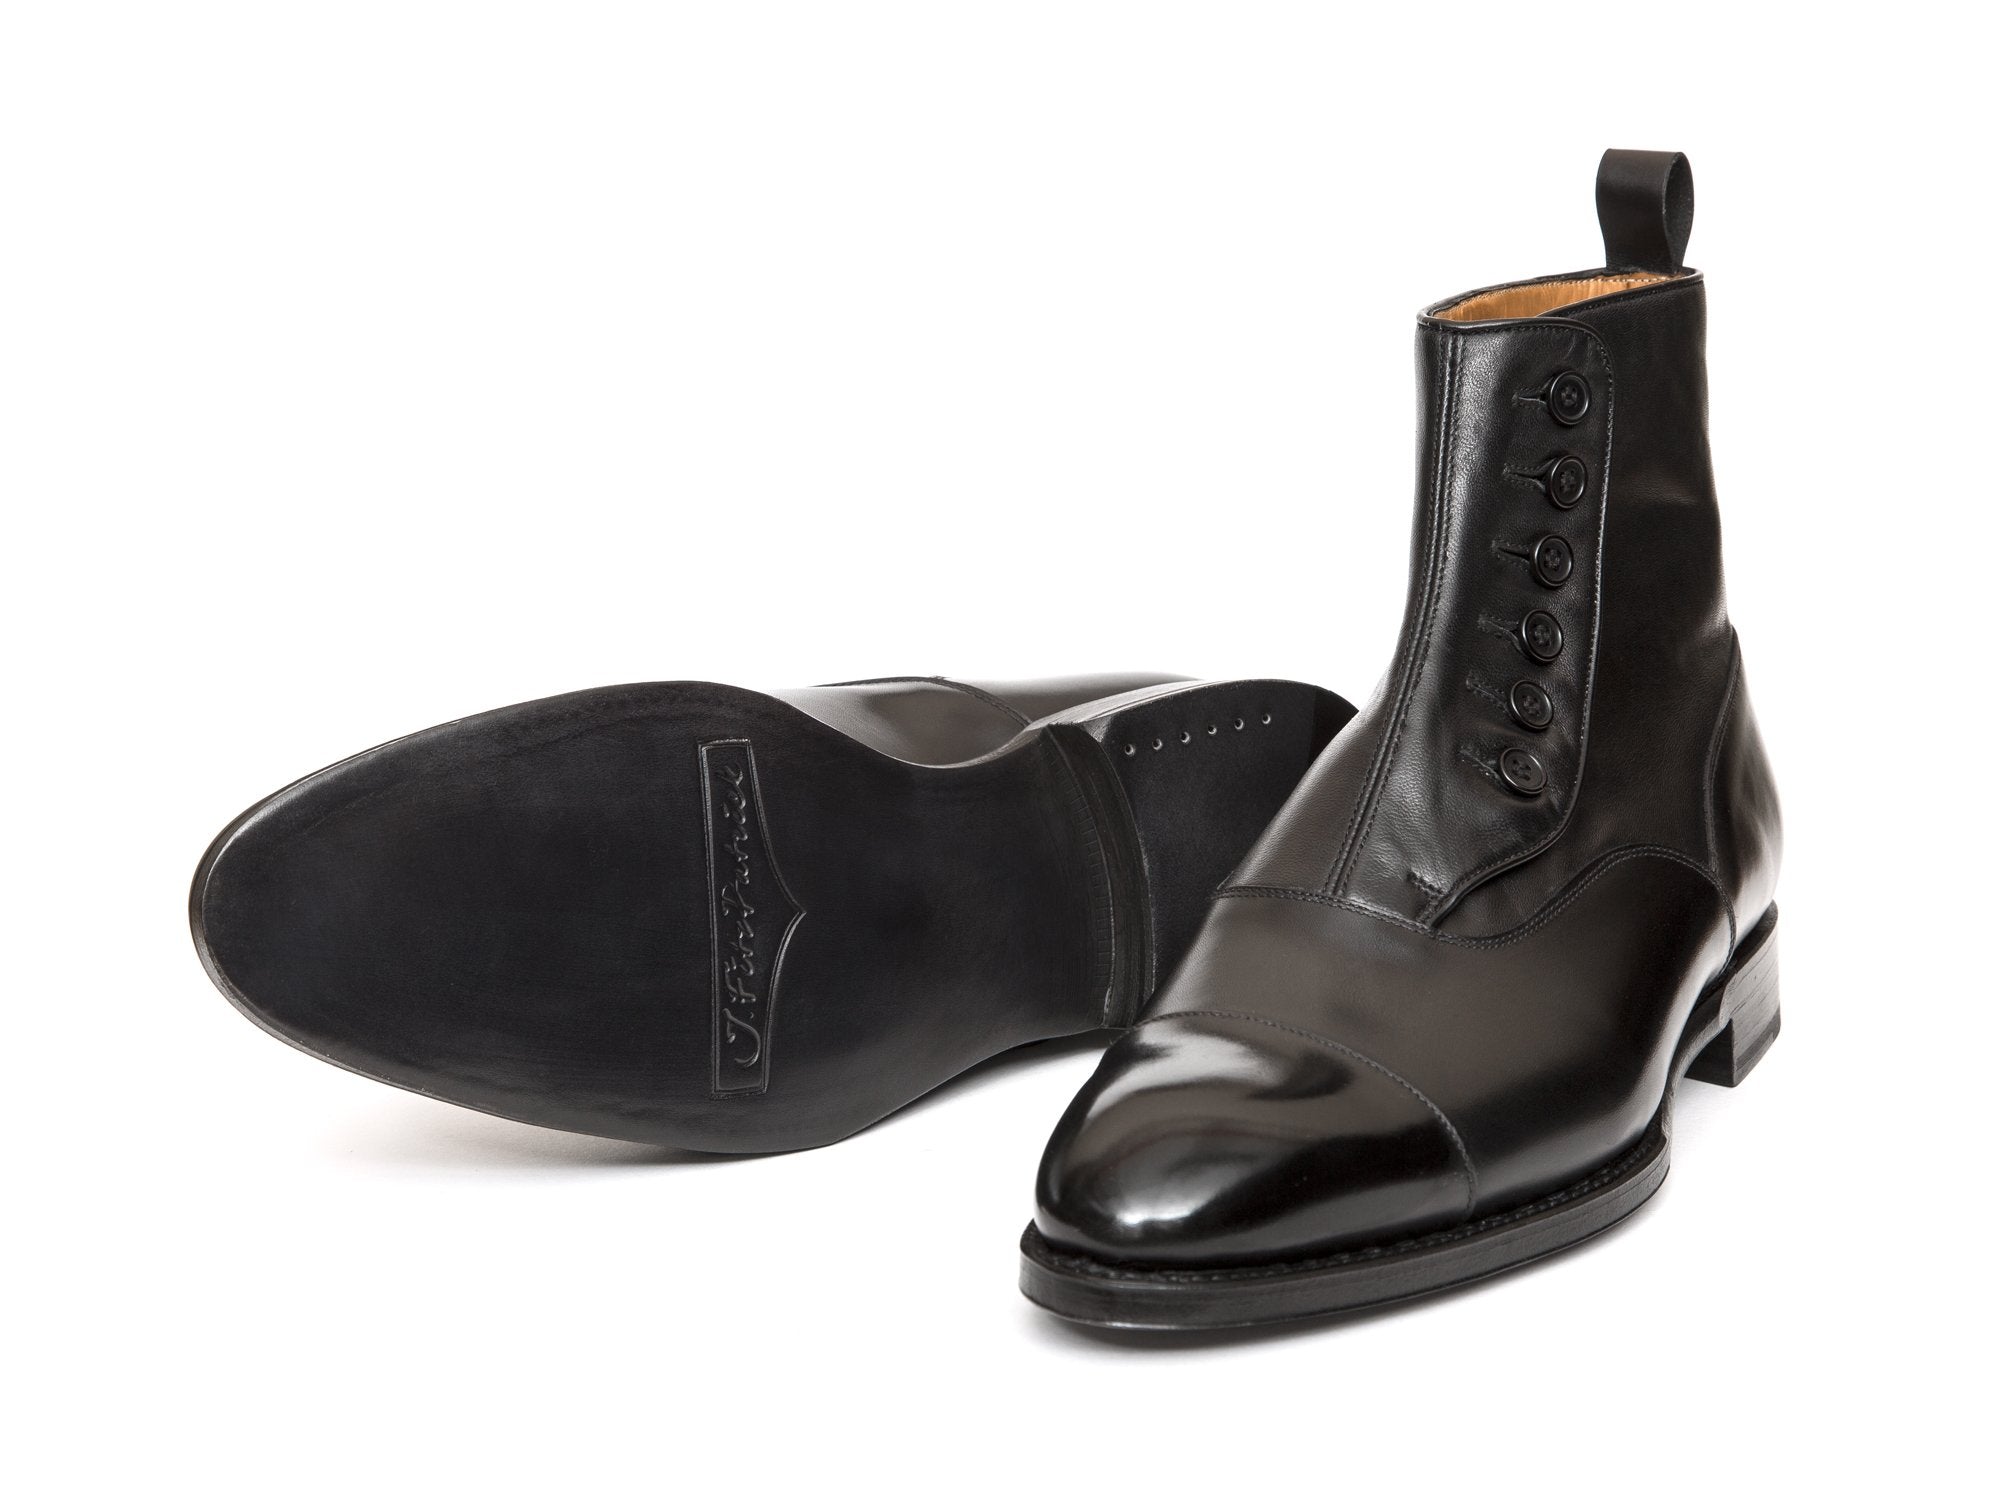 J.FitzPatrick Footwear - Bellevue - Black Calf / Soft Black Leather - NGT Last